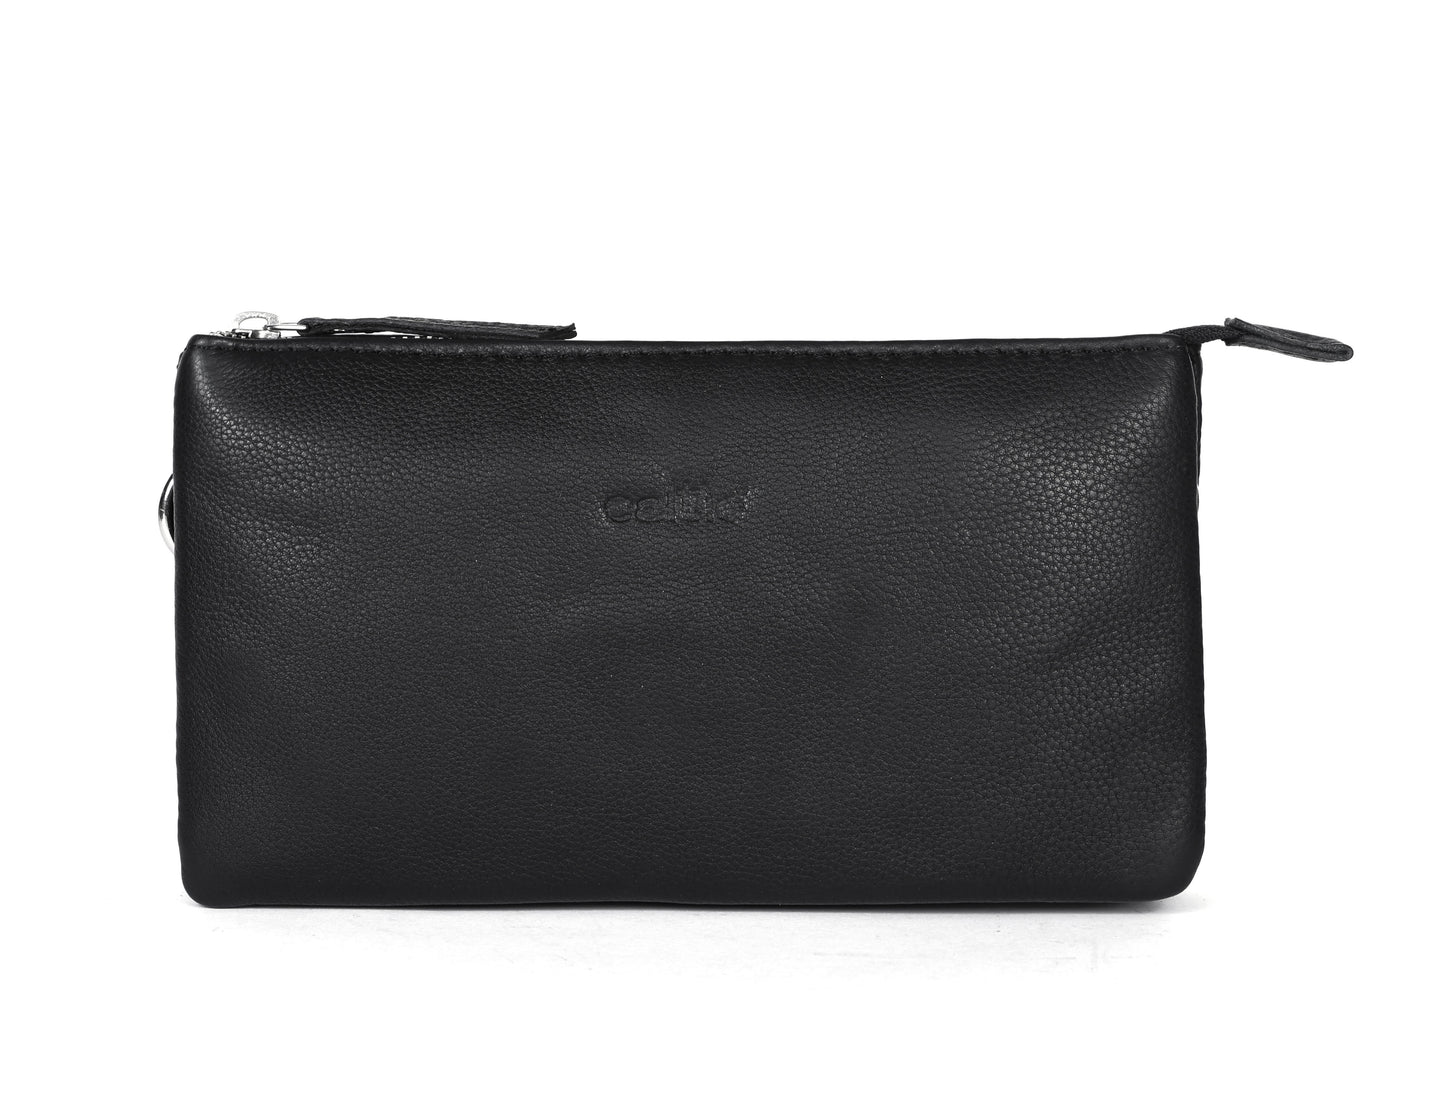 Black Smooth Leather Sling Bag: Timeless Elegance Meets Modern Convenience. - CELTICINDIA